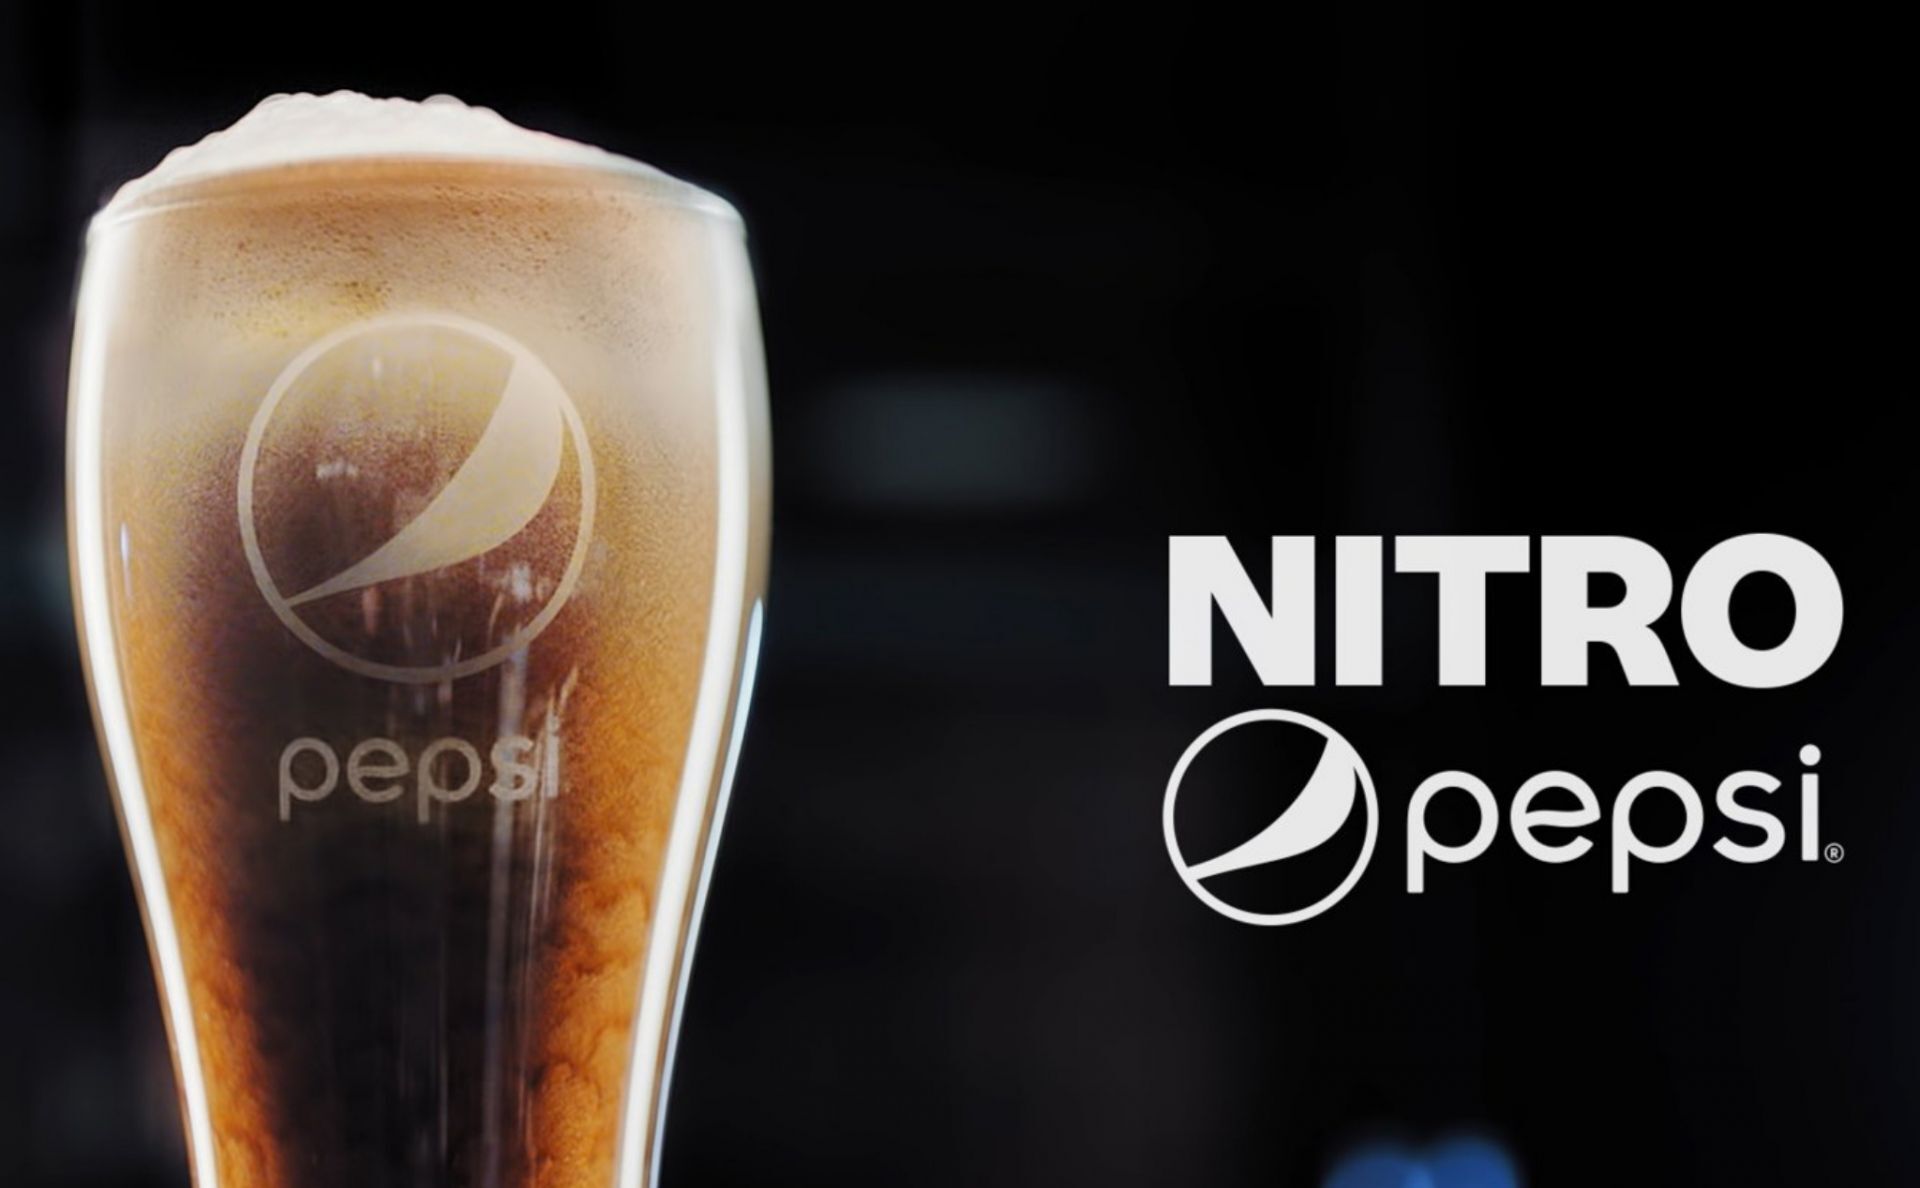 Nitro Pepsi